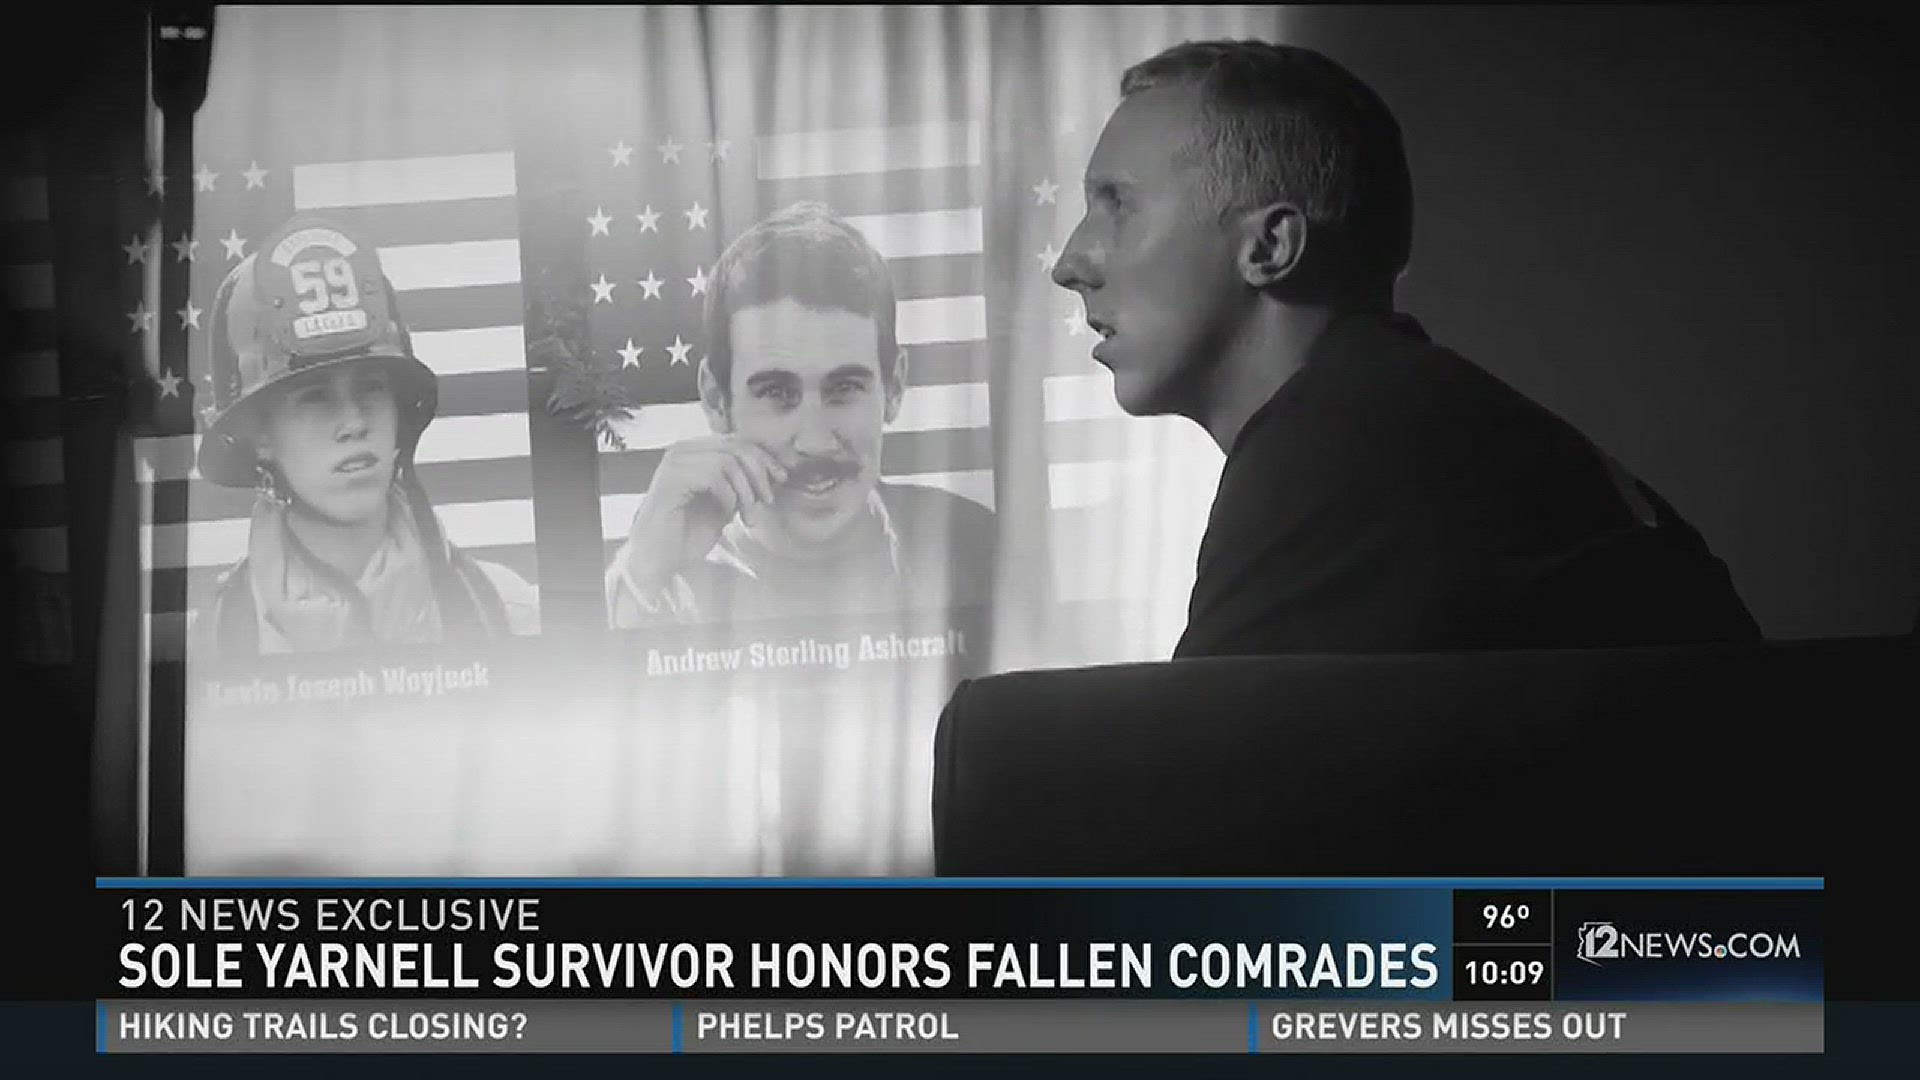 Sole Yarnell survivor honors fallen comrades.